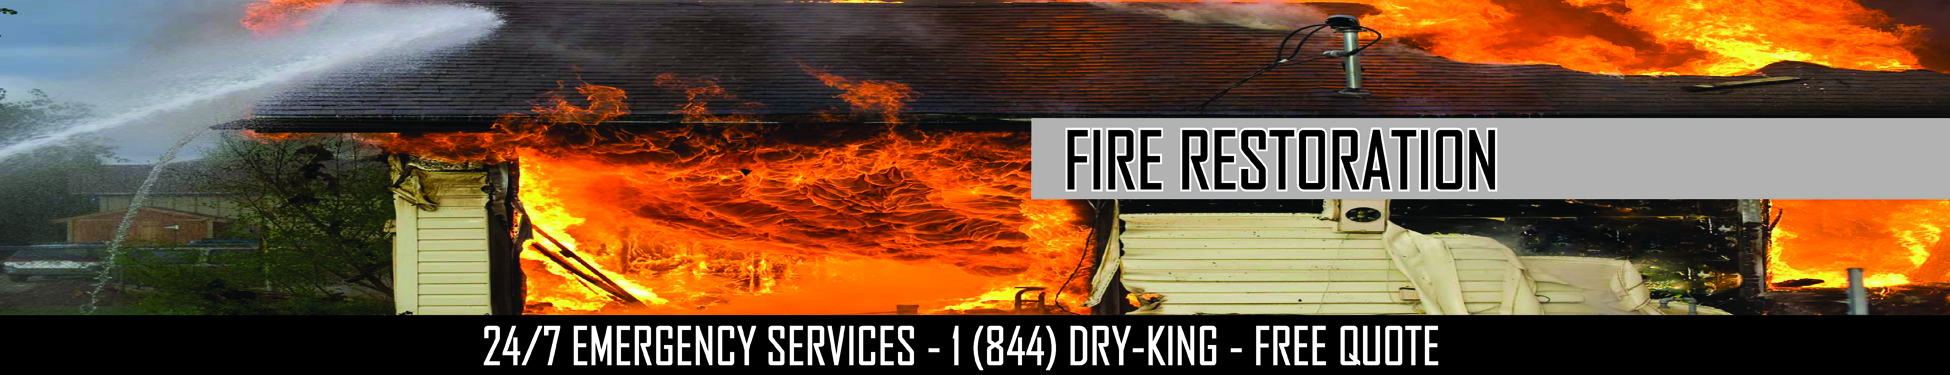 Fire1-Restoration-1950x375-Slider